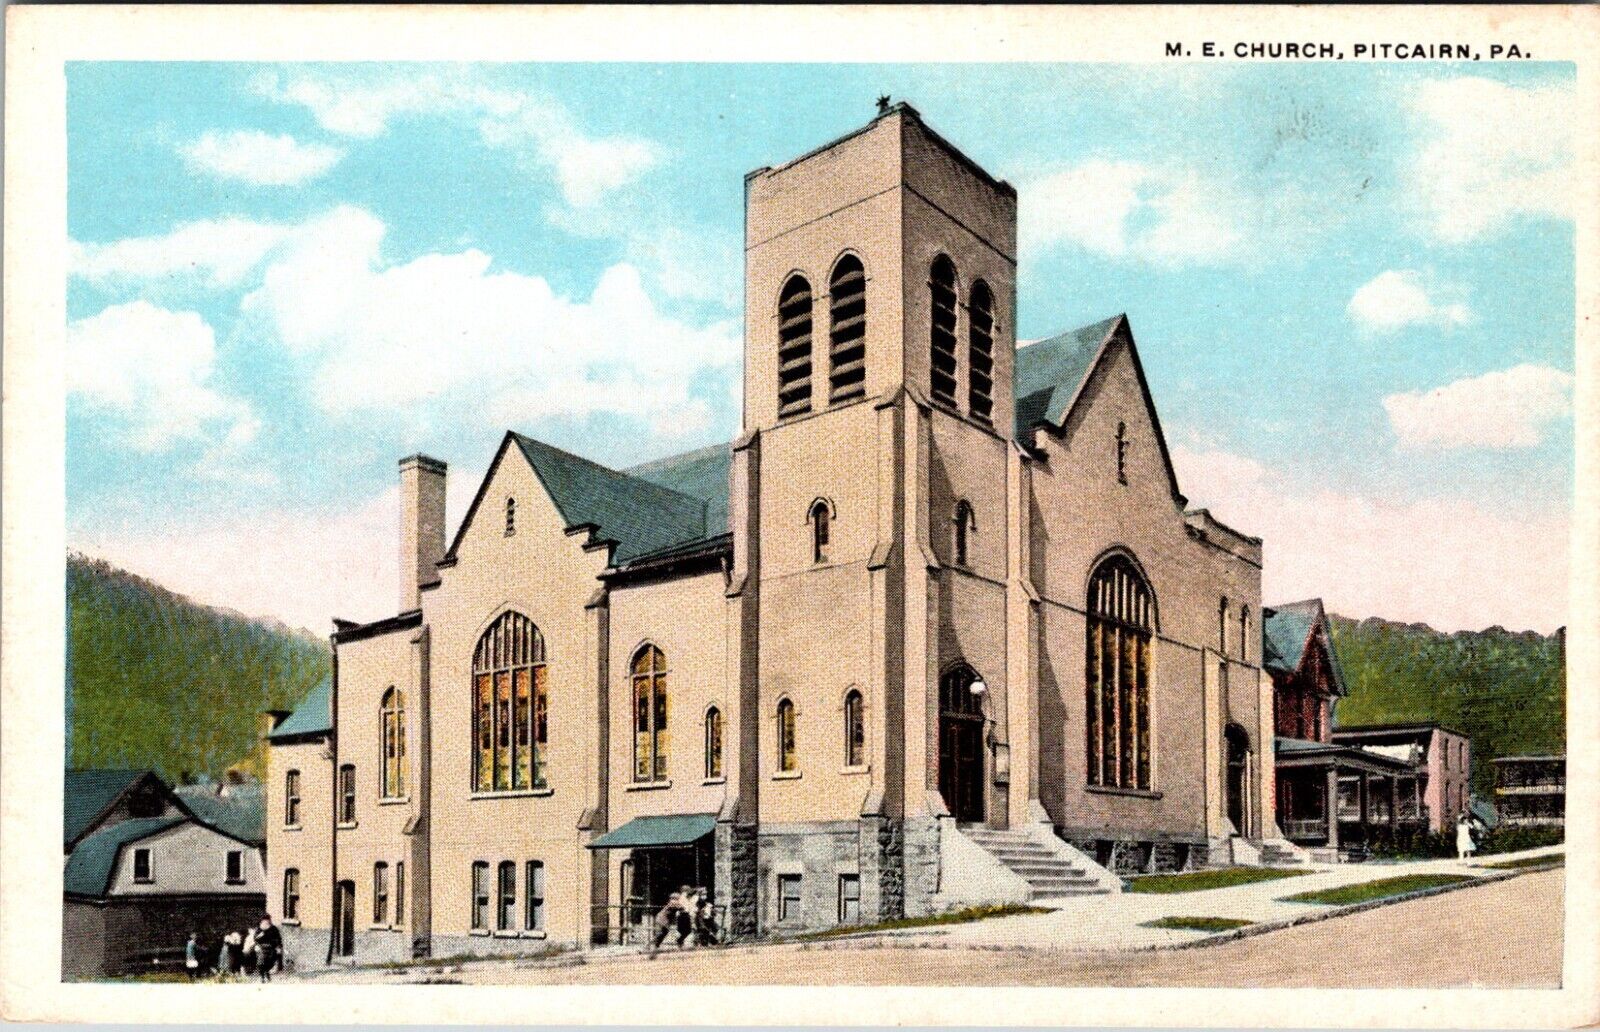 Pitcairn, PA Pennsylvania M. E. Church Vintage Postcard I370